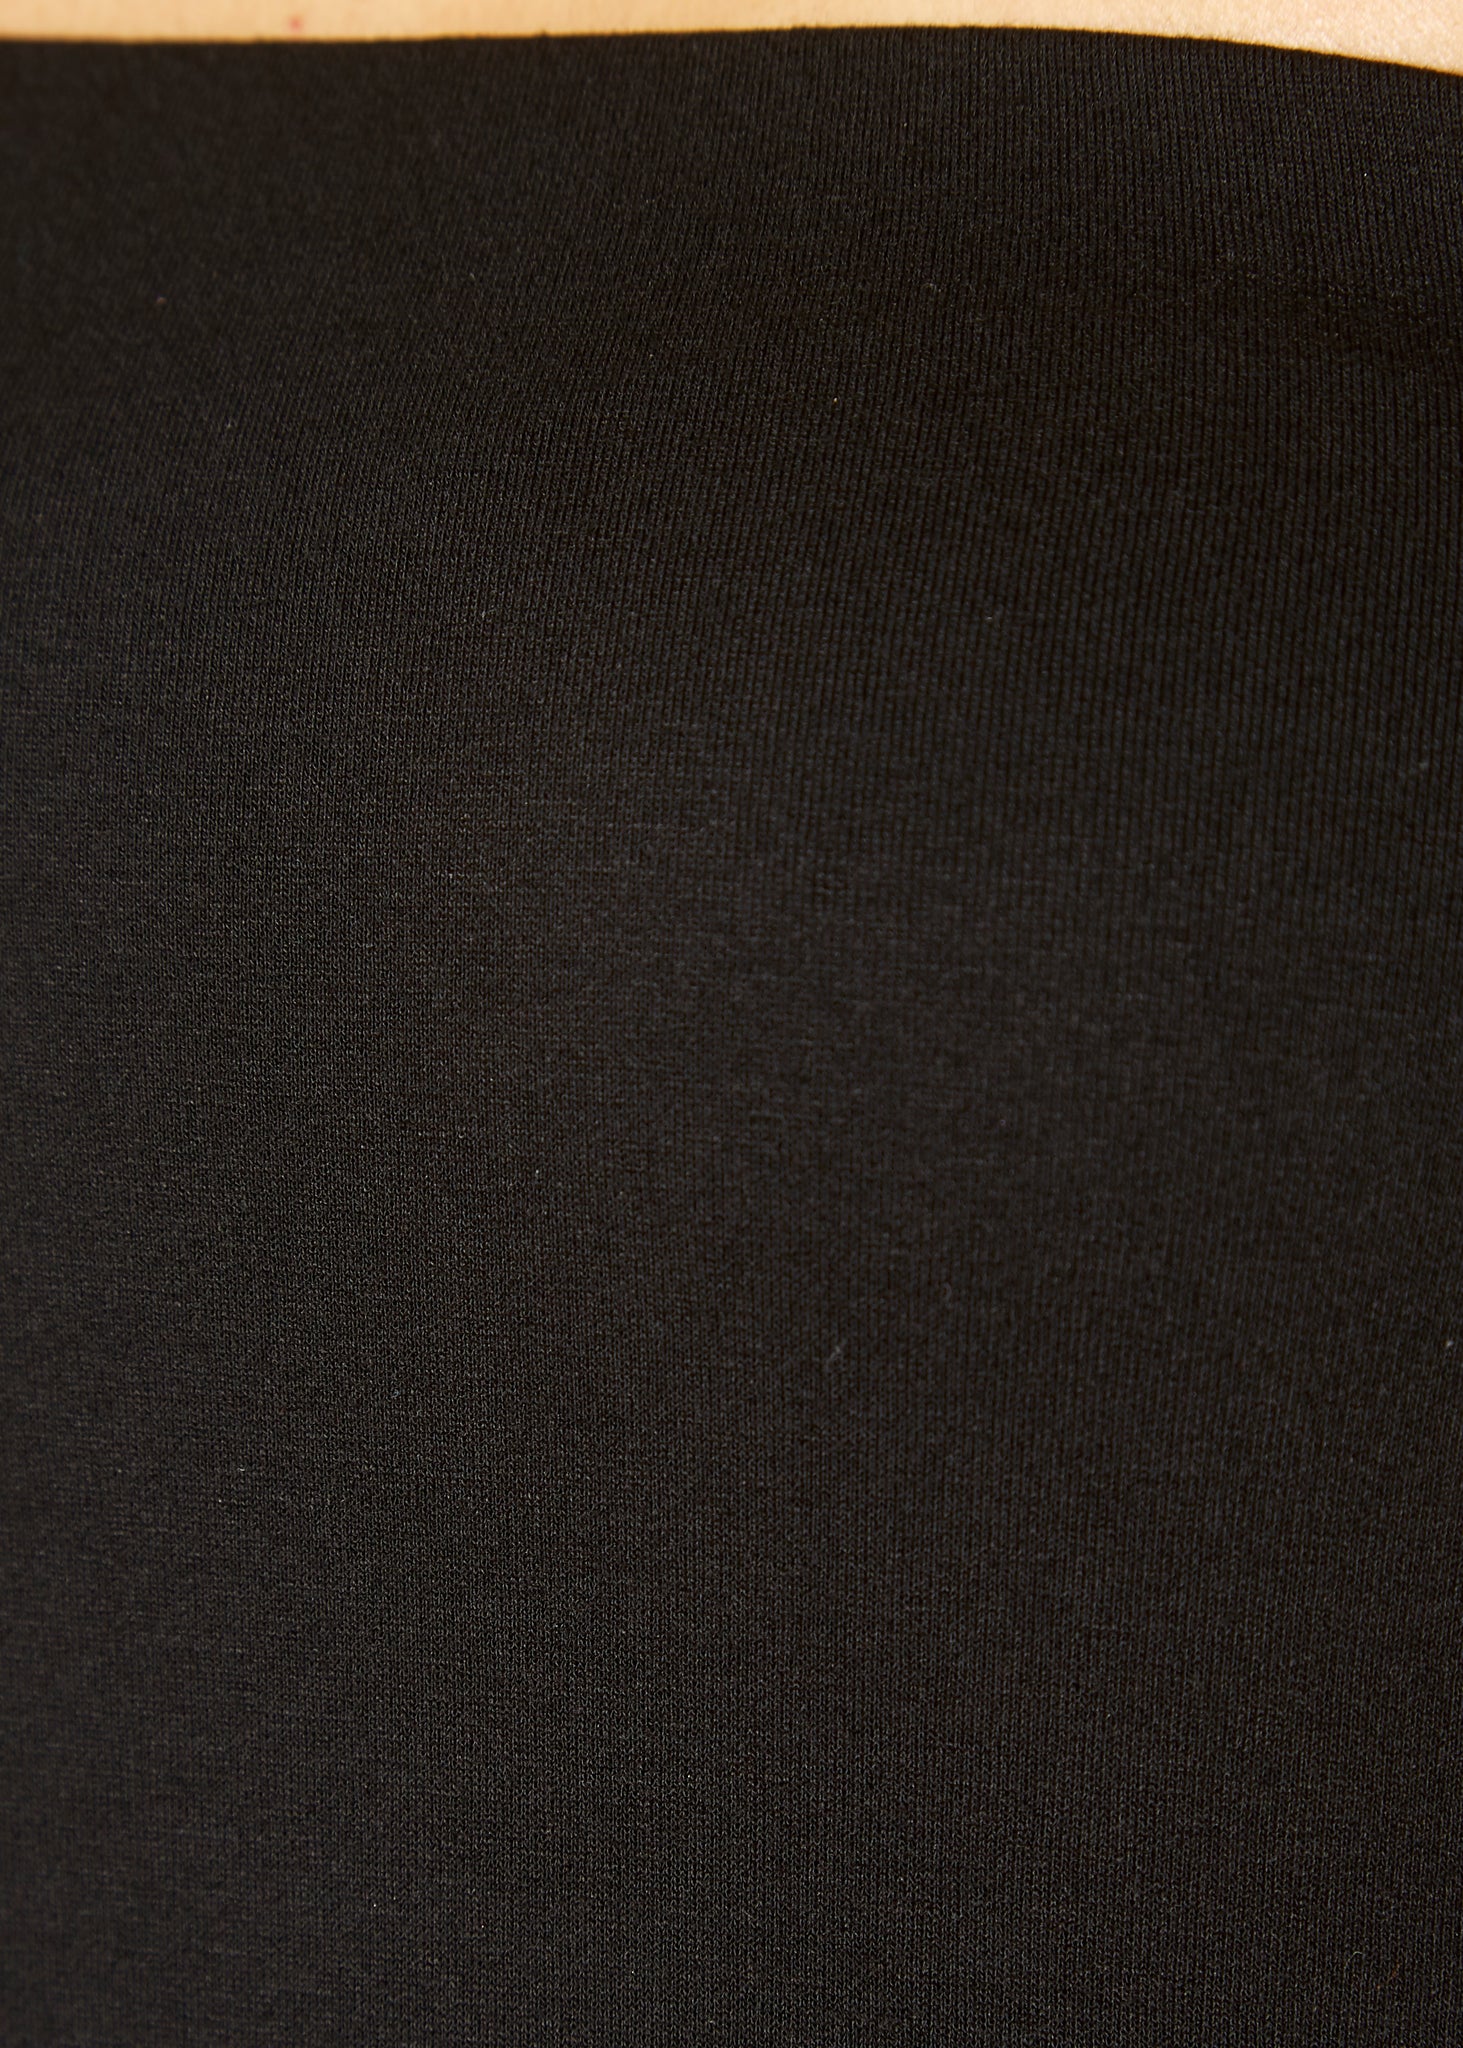 'Ikis' Strapless Black Jersey Dress - Jessimara